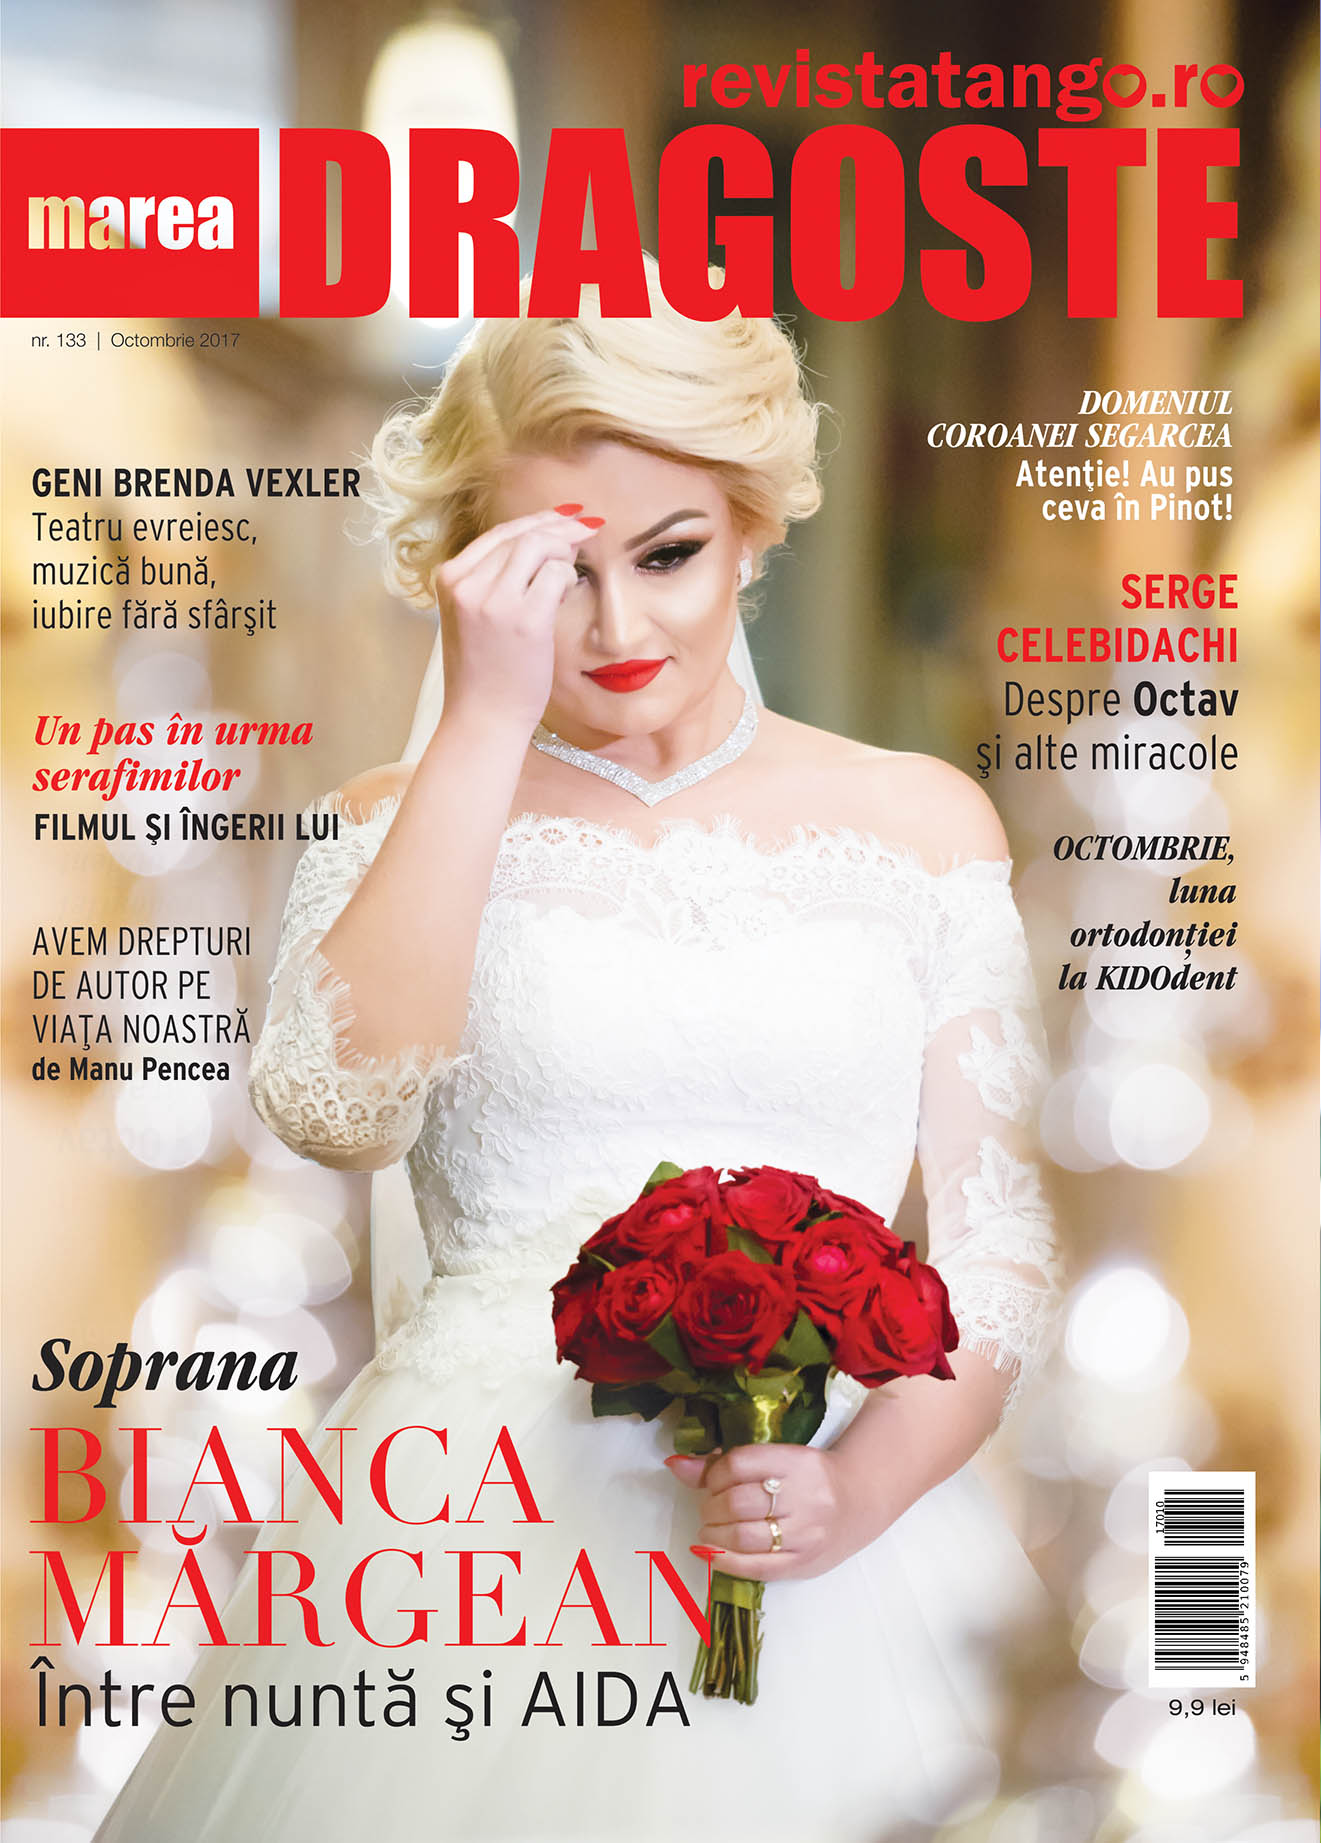 Bianca Margean respectiv Gáspár György si Urania Cremene pe copertele Marea Dragoste-revistatango.ro, nr. 133, octombrie 2017